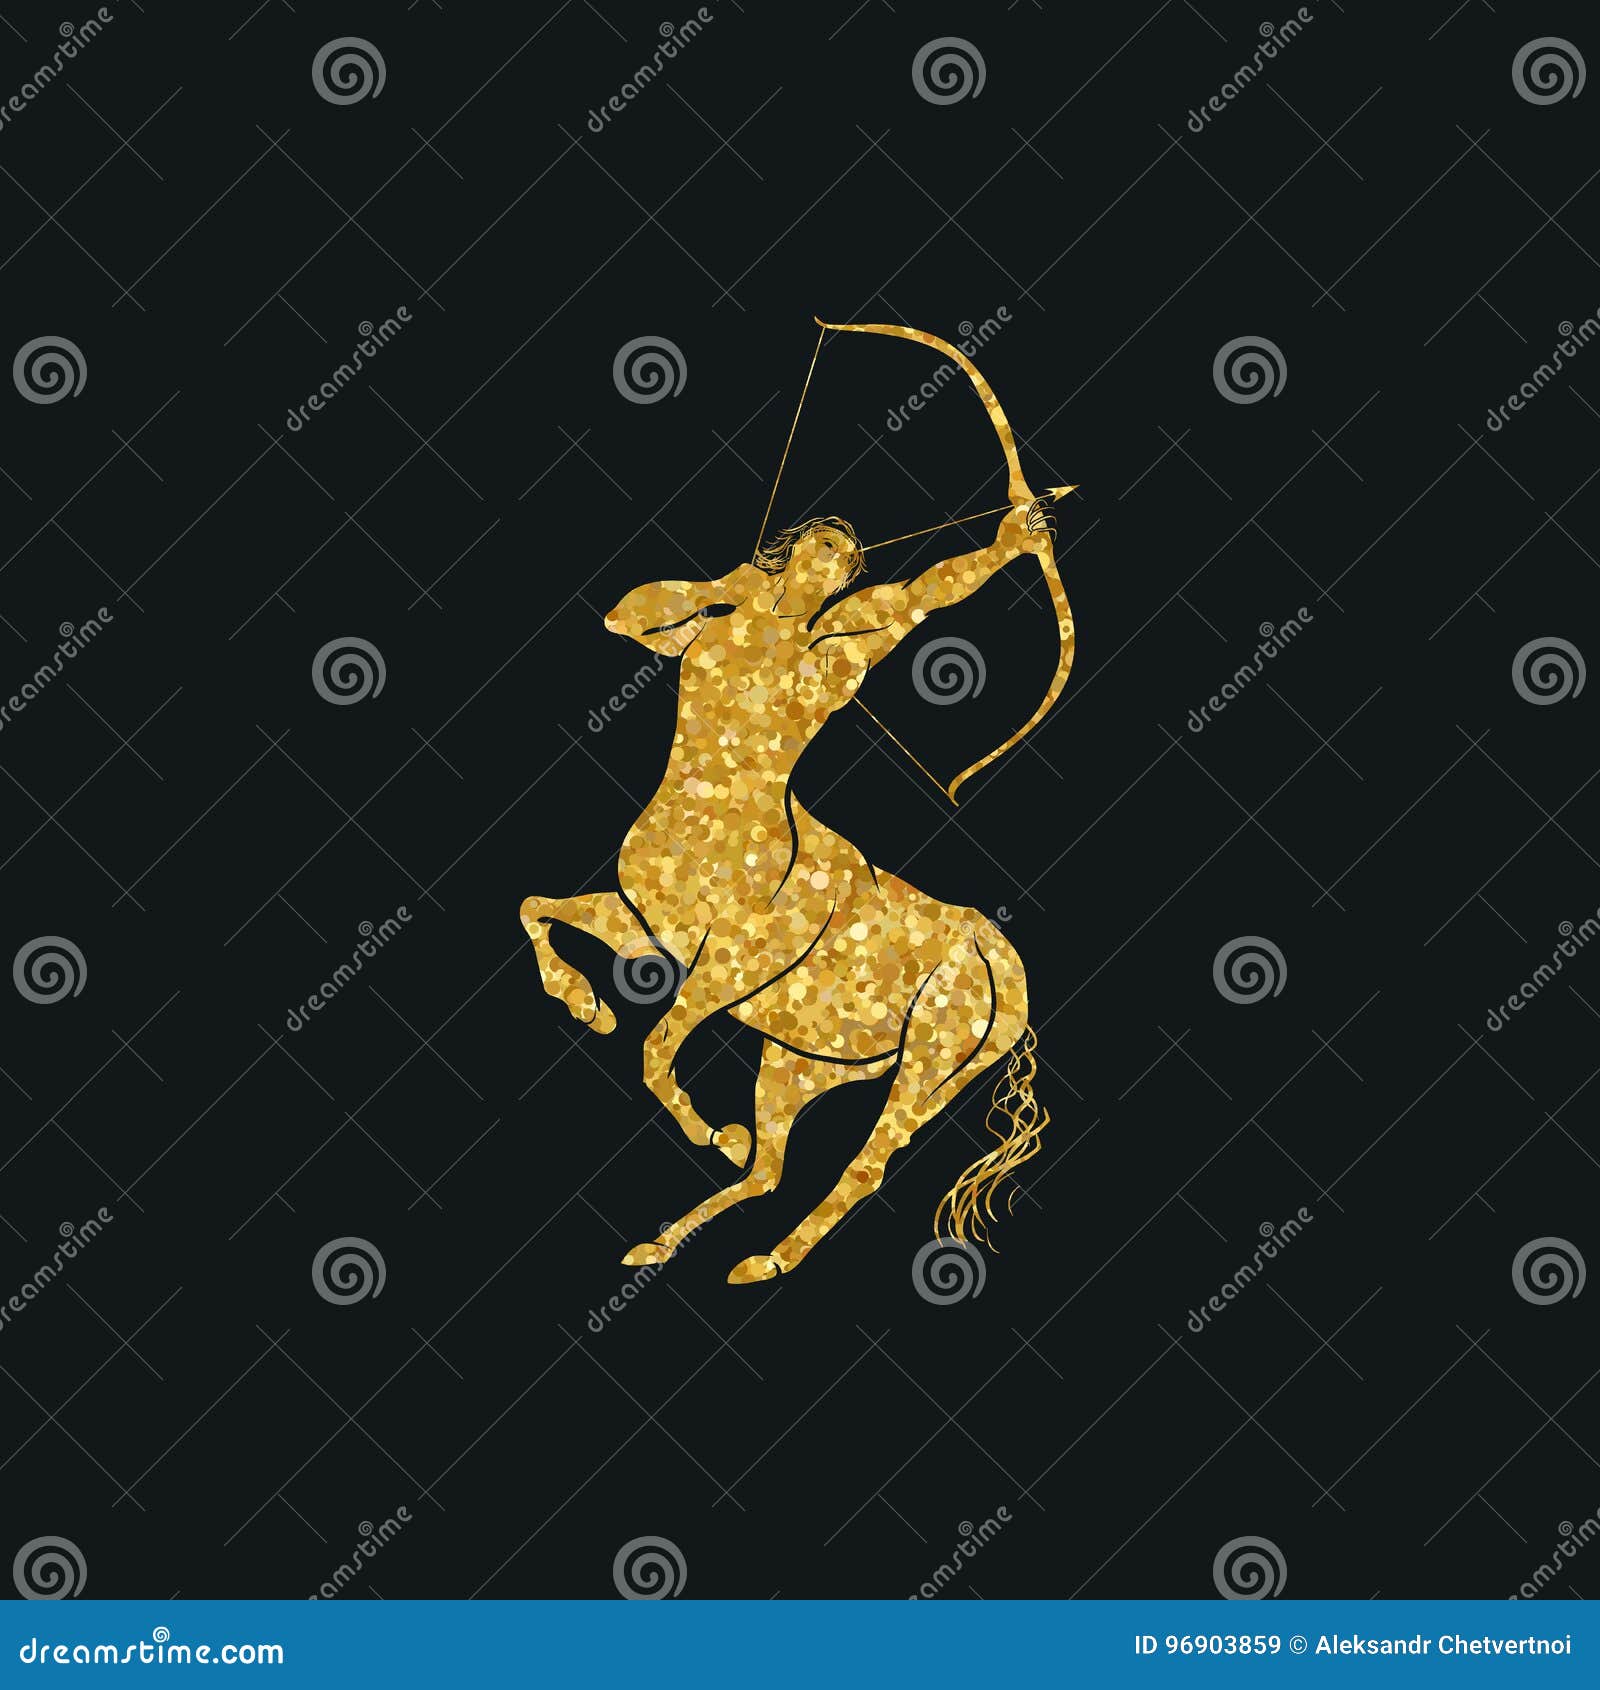 centaur concept of mythical centaur archer horse man character with a bow and arrow